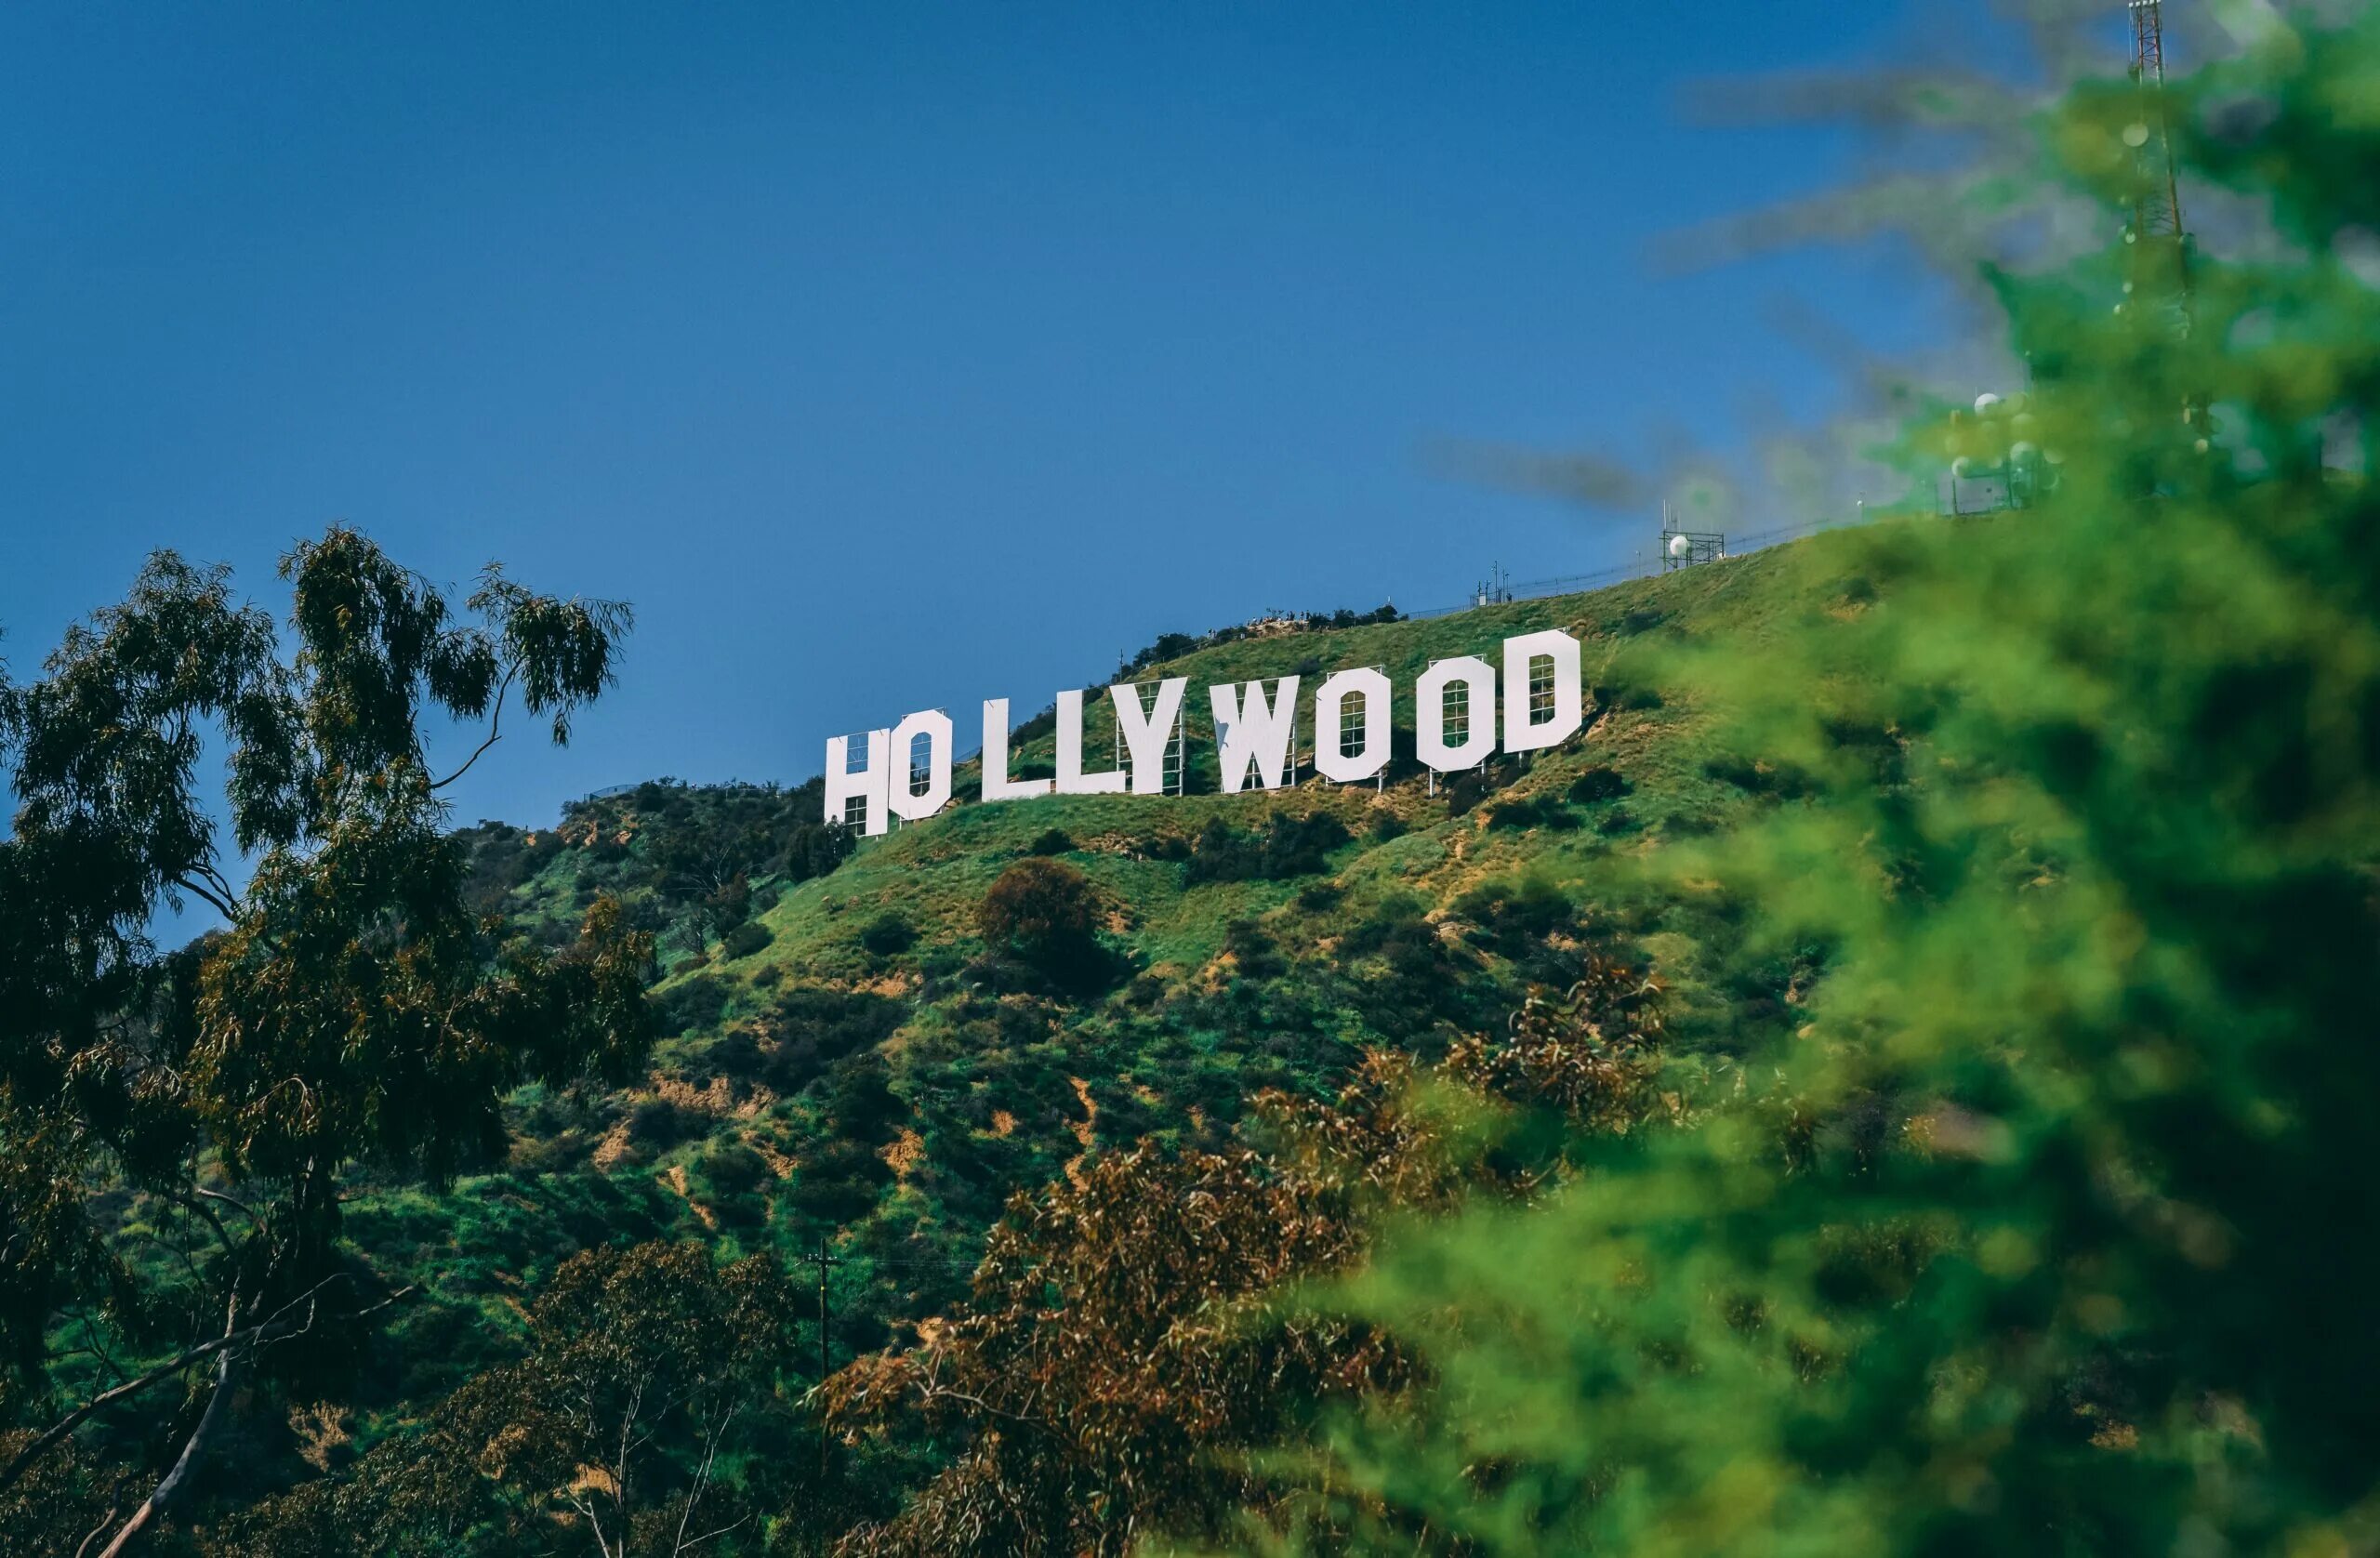 Галивуд. Лос-Анджелес Калифорния Голливуд. Знак Голливуда Лос-Анджелес. Лос Анджелес надпись Голливуд. Лос Анджелес Лос Анджелес Голливуд.